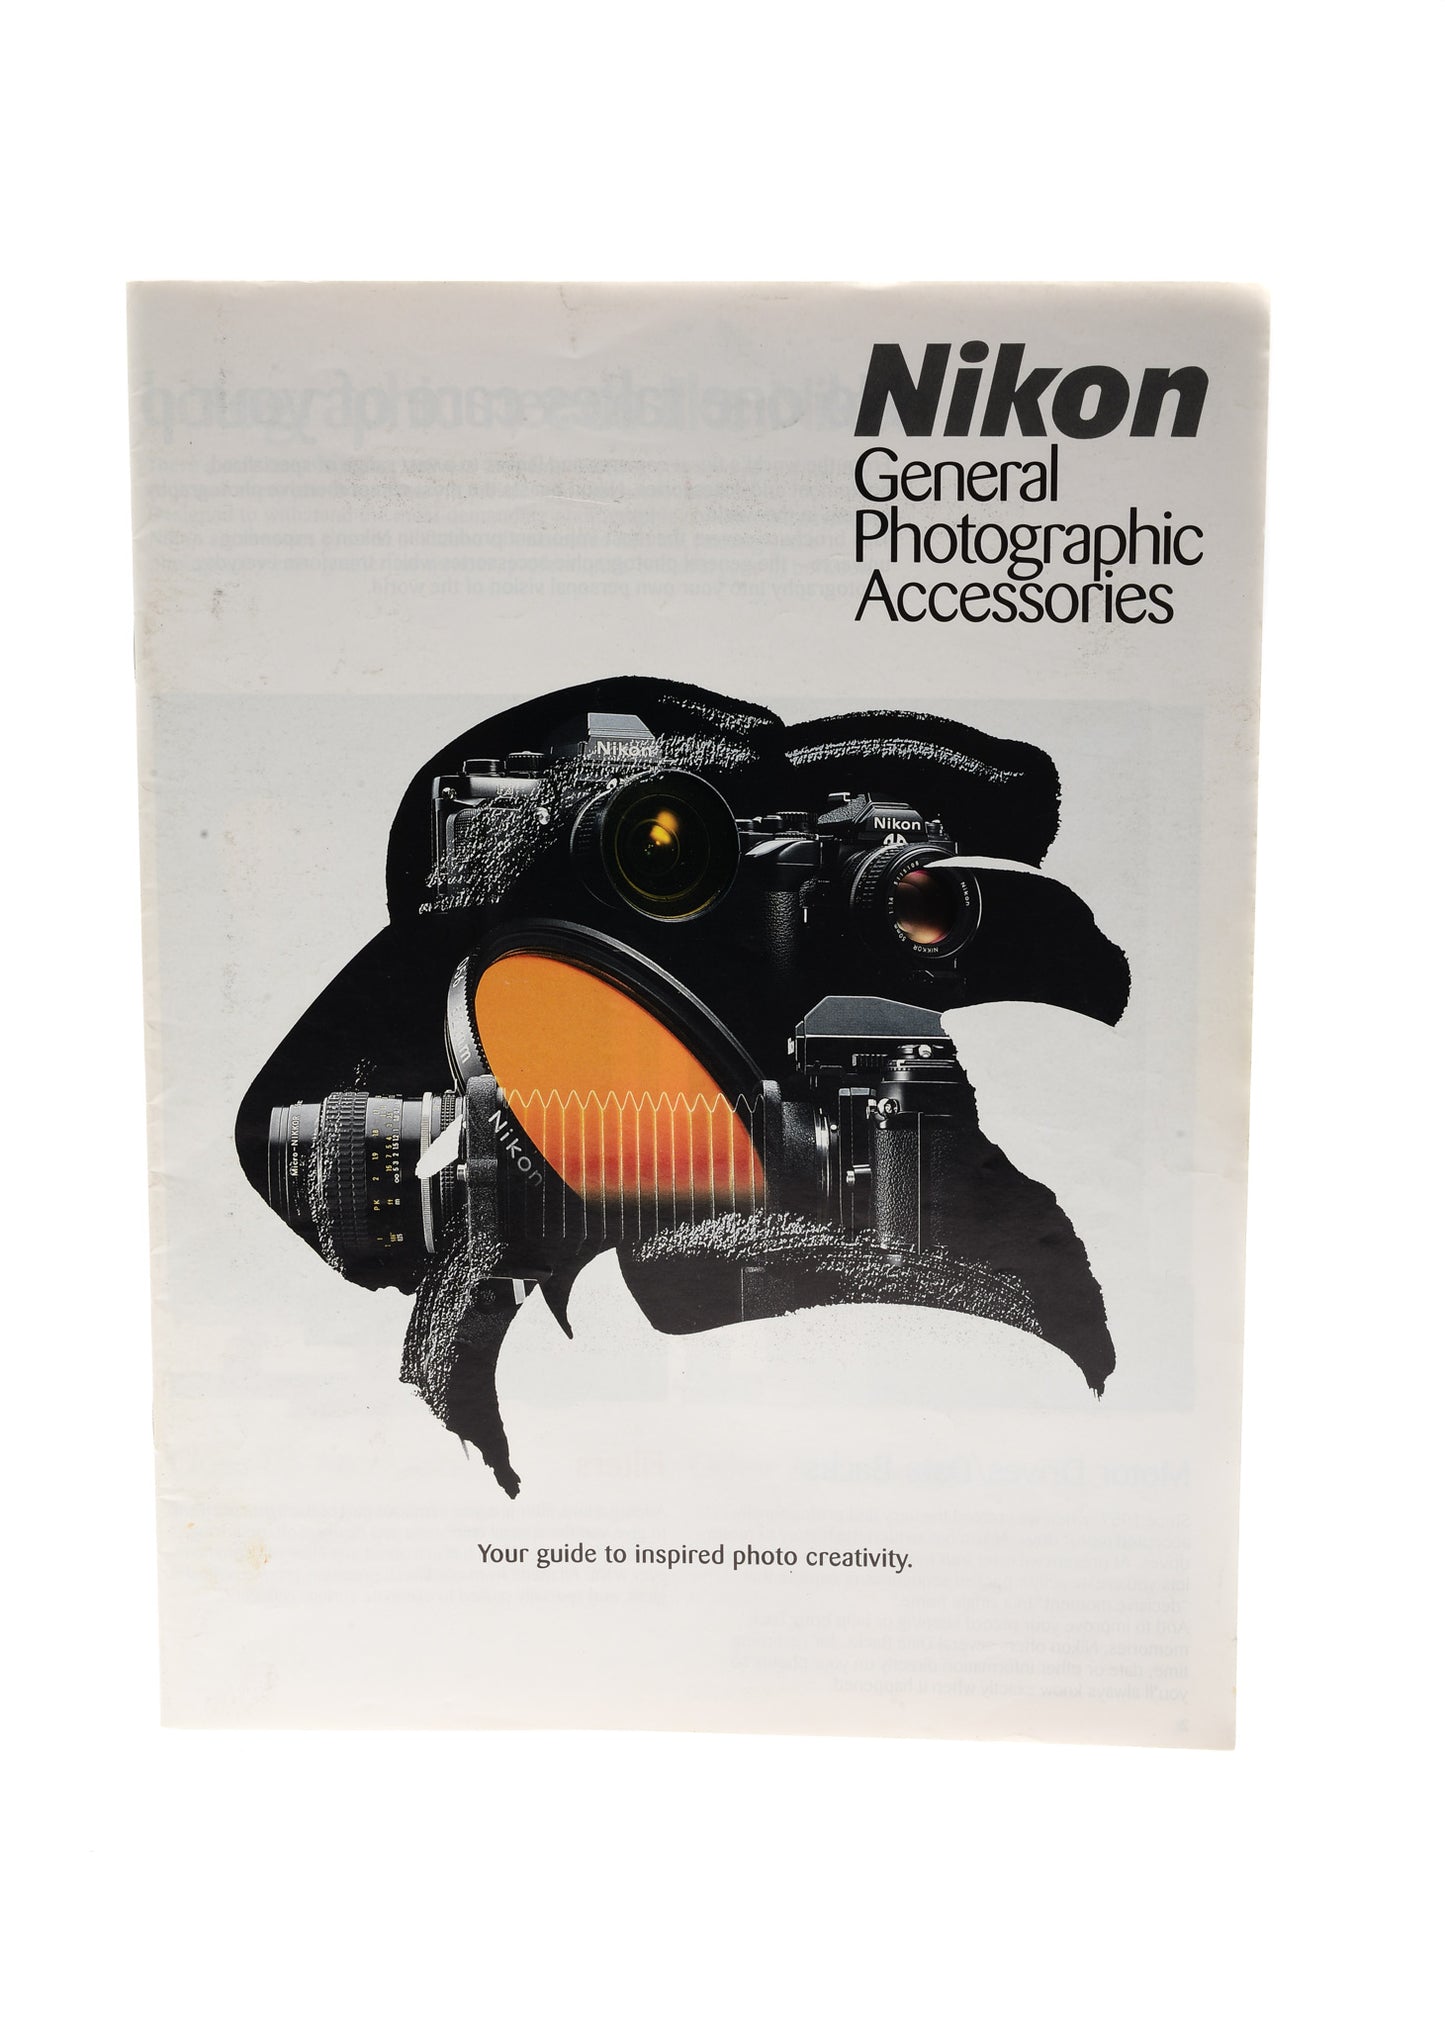 Nikon General Photographic Accessories Guide - Accessory